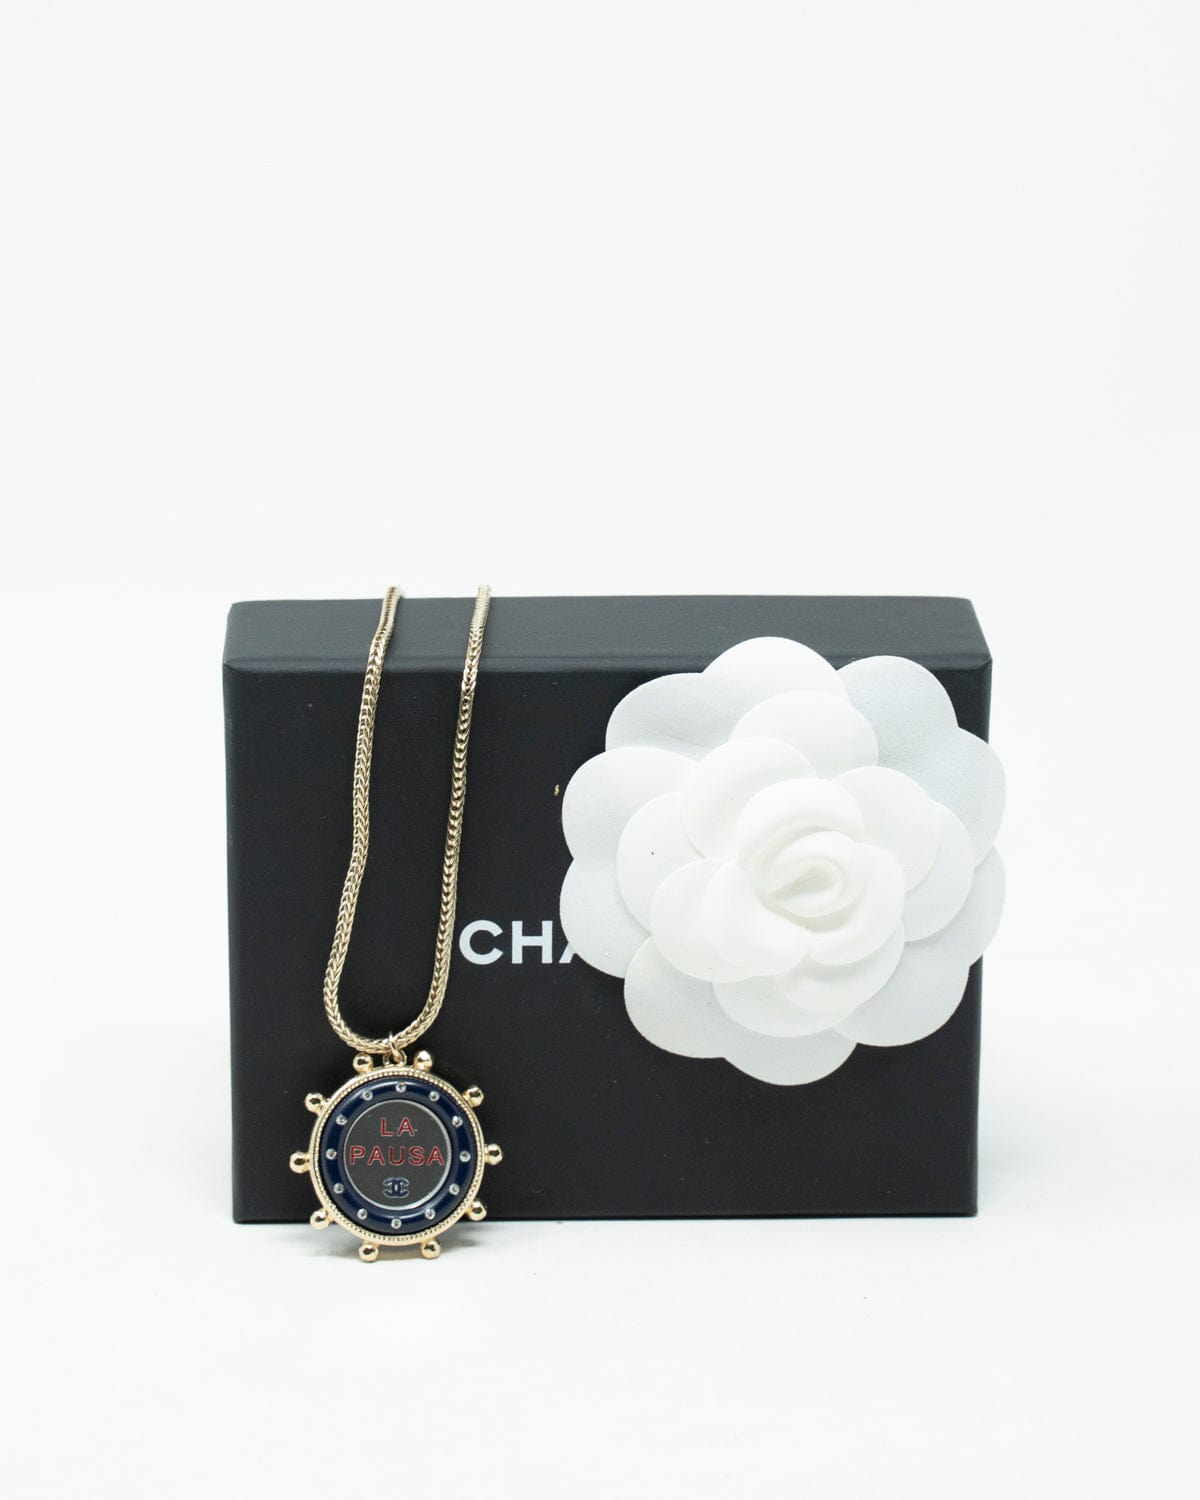 Chanel Chanel La Pausa Gold Neclace - ADL1851